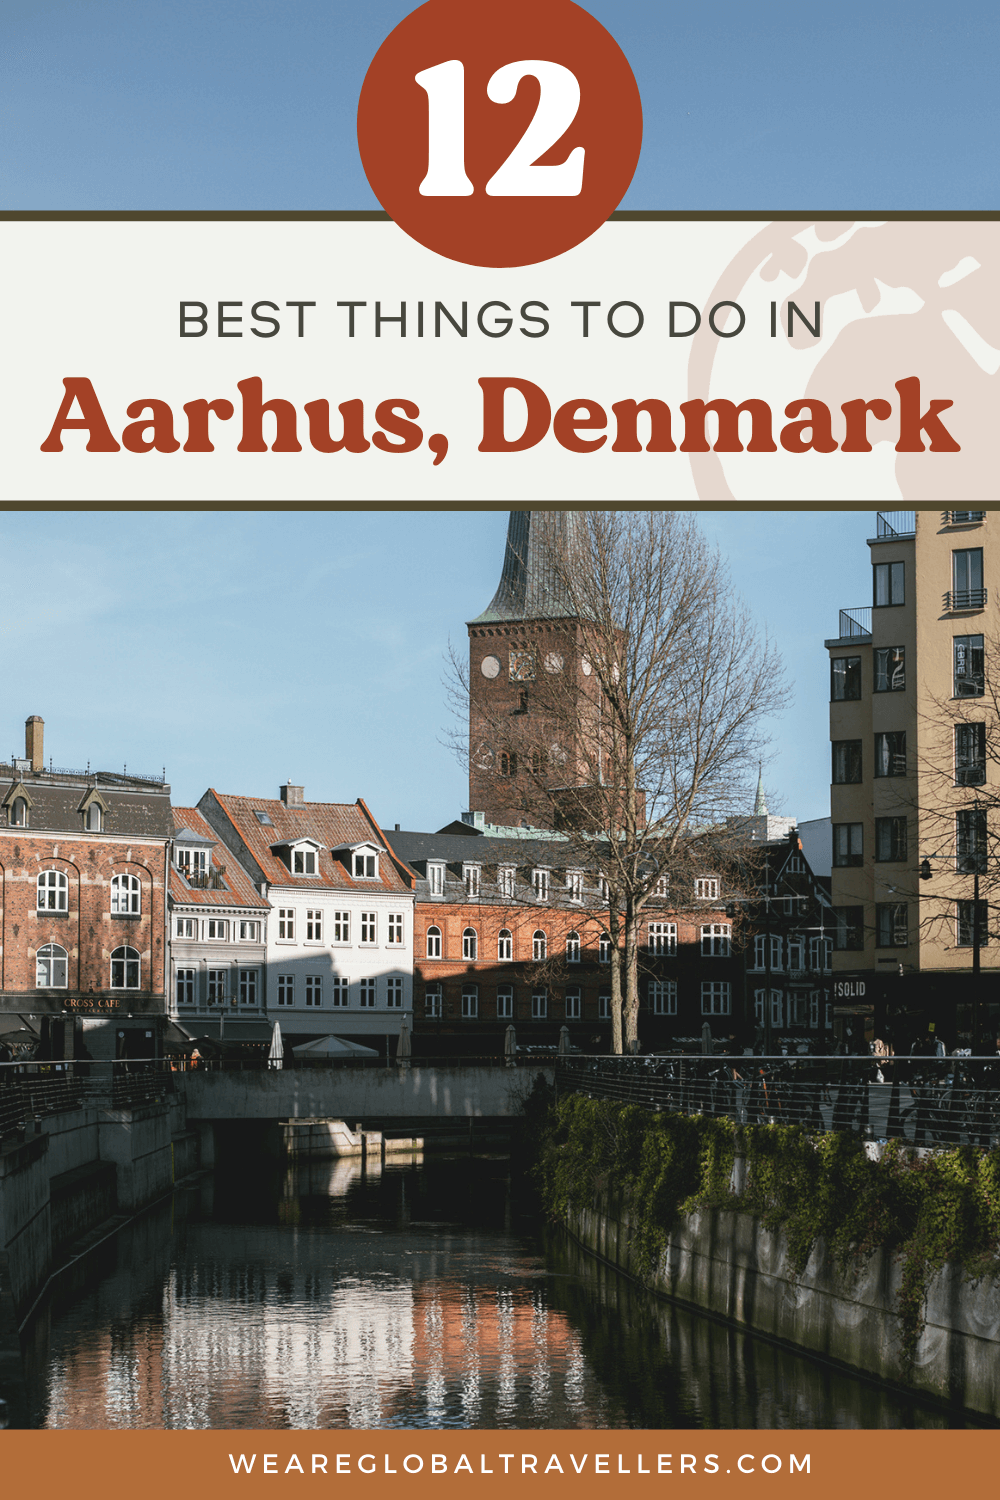 The best things to do in Aarhus, Denmark